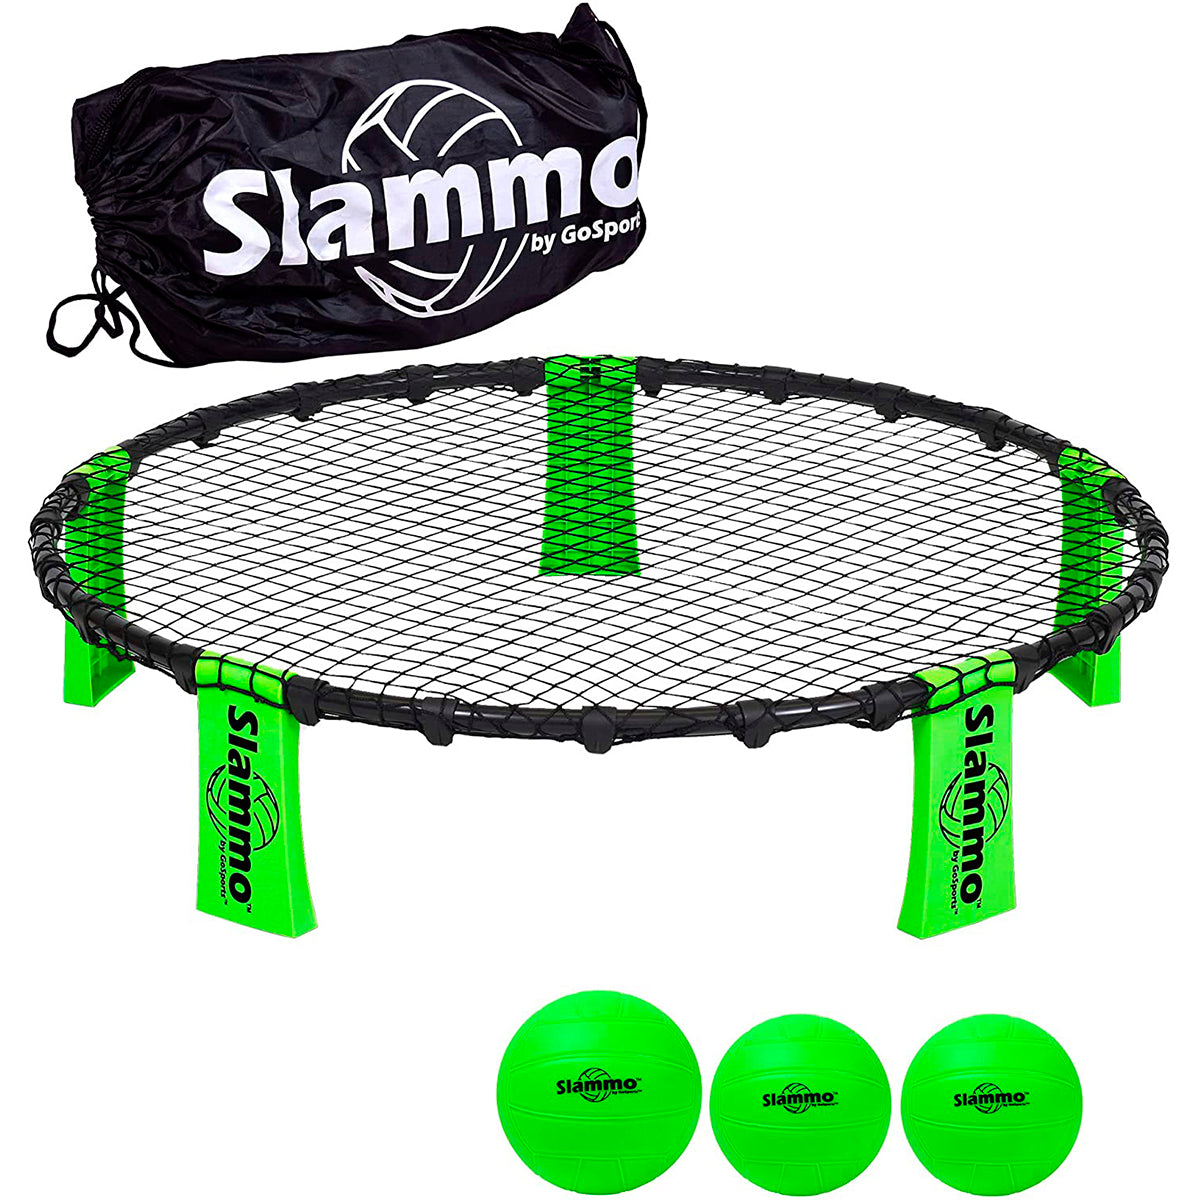 Slammo game set (Spikeball)